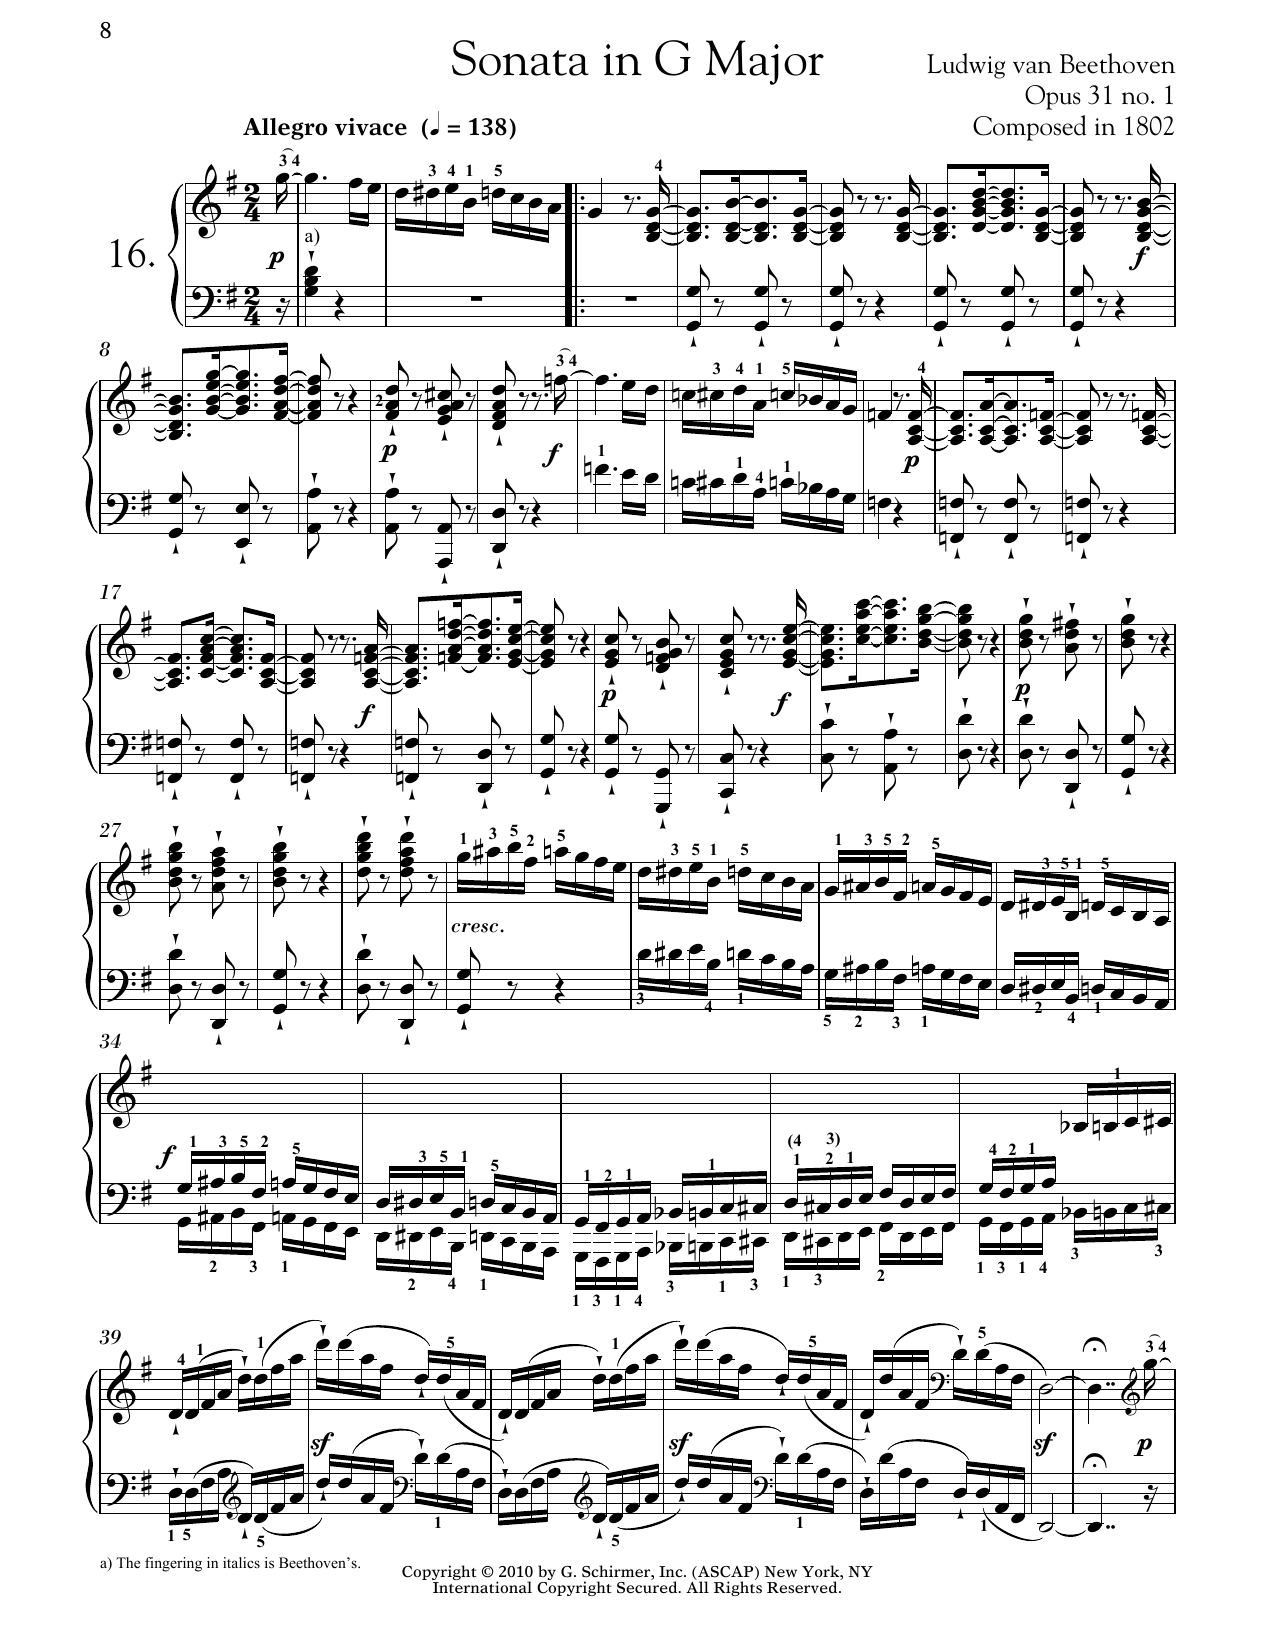 Ludwig van Beethoven Piano Sonata No. 16 In G Major, Op. 31, No. 1 Sheet Music Notes & Chords for Piano - Download or Print PDF